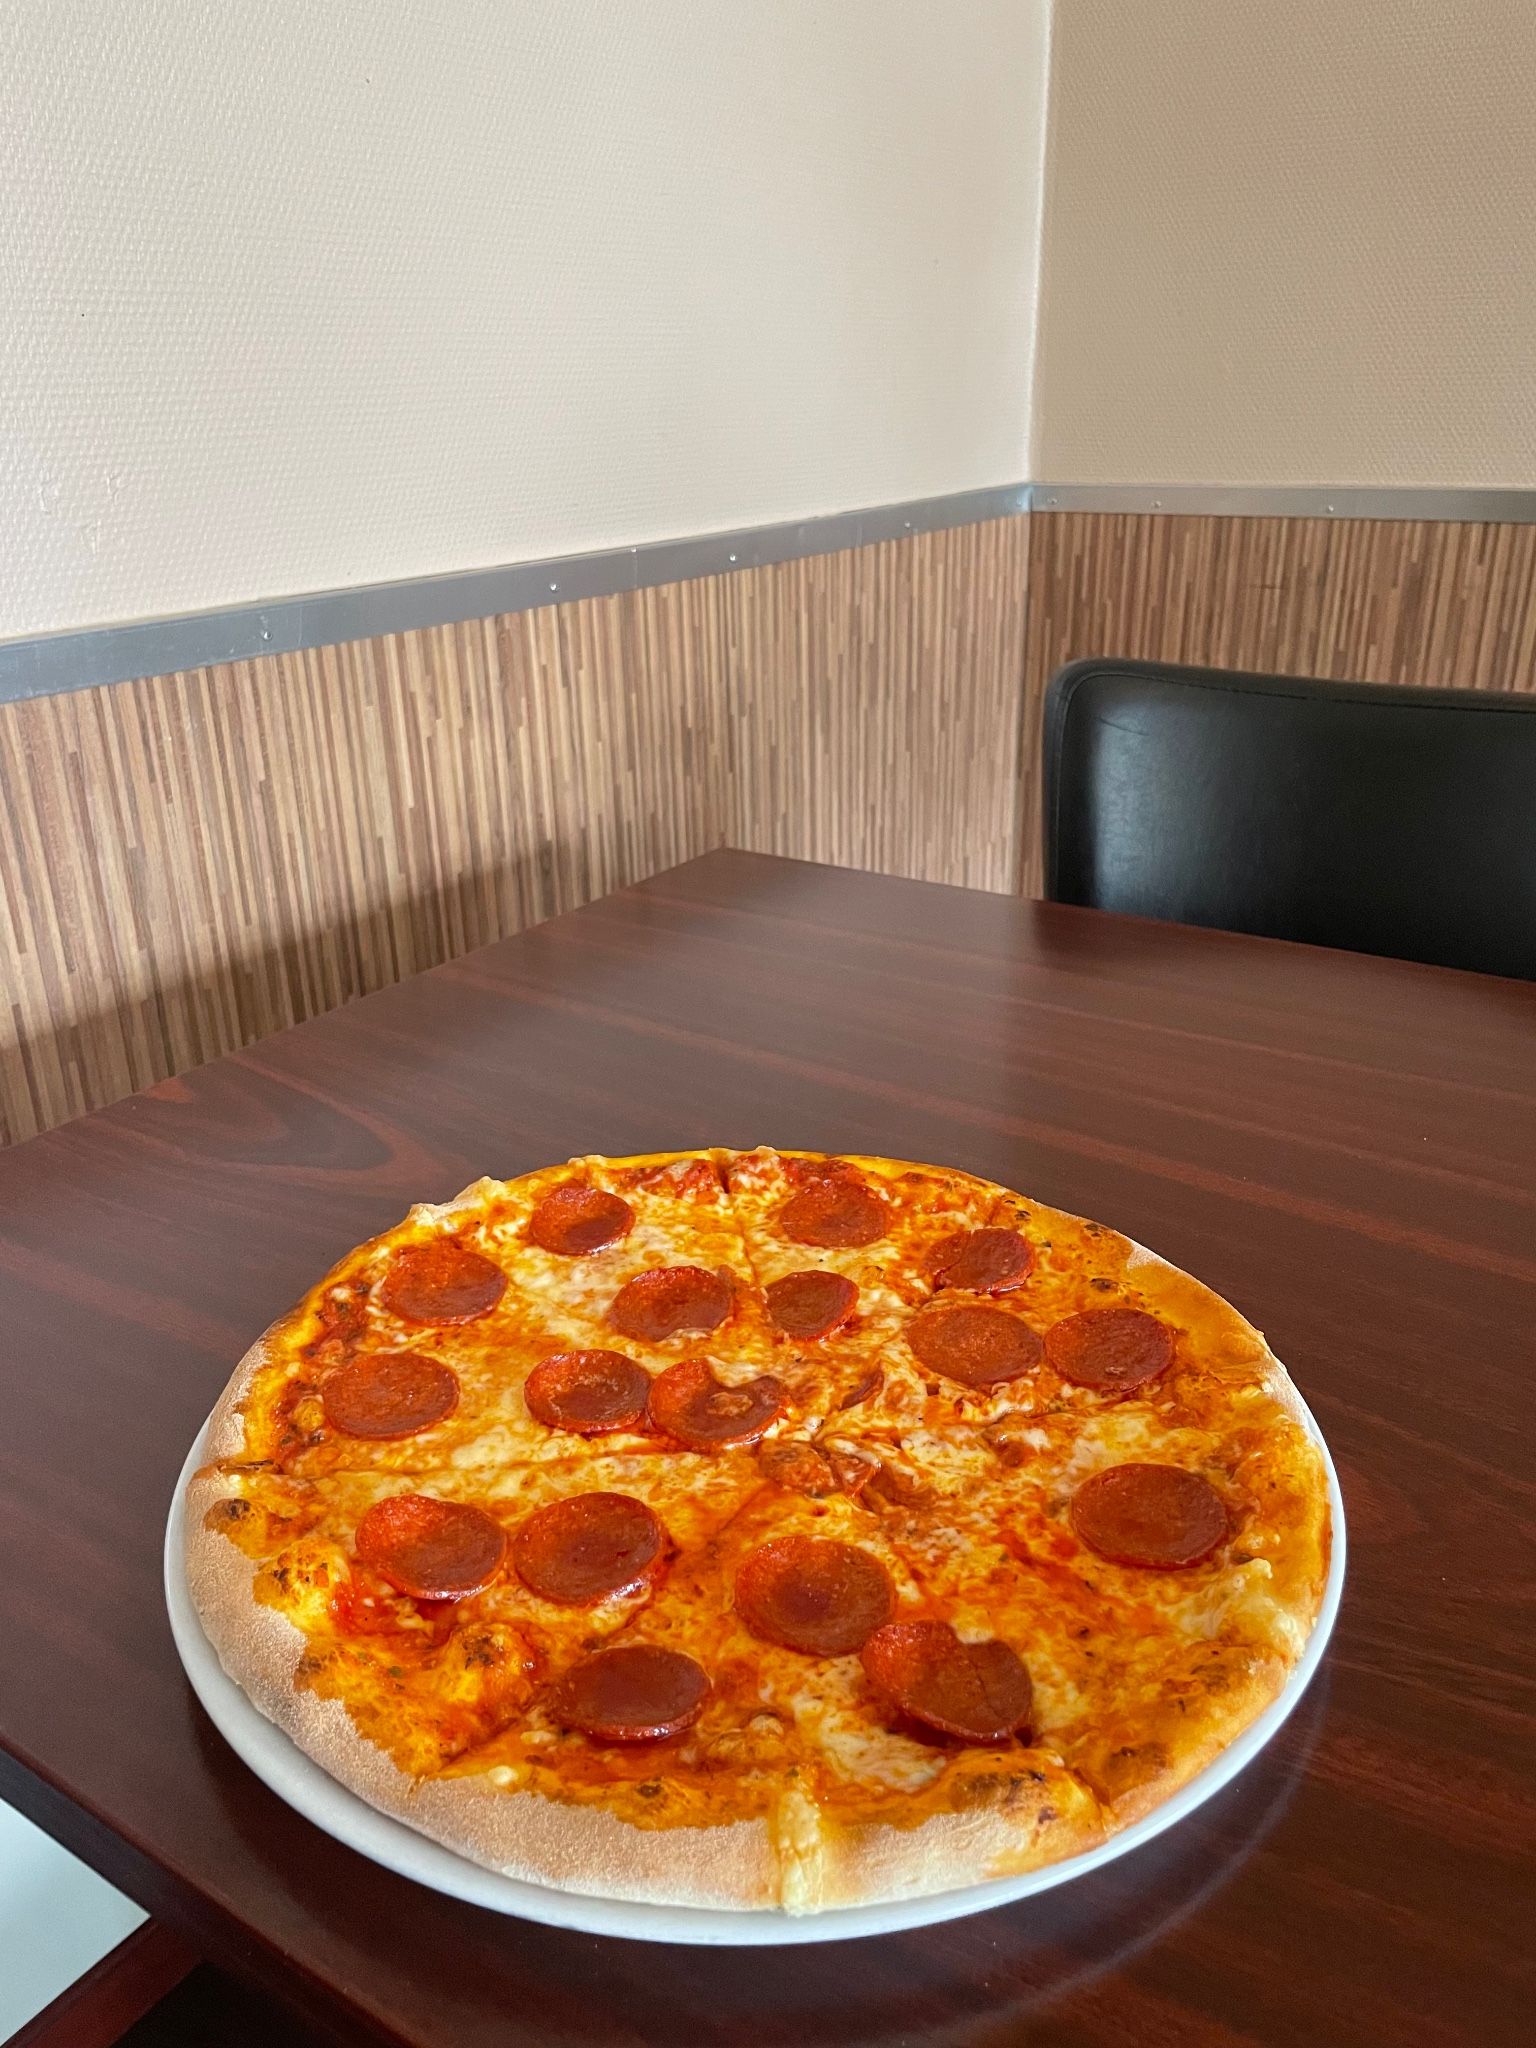 8. Pepperoni Pizza